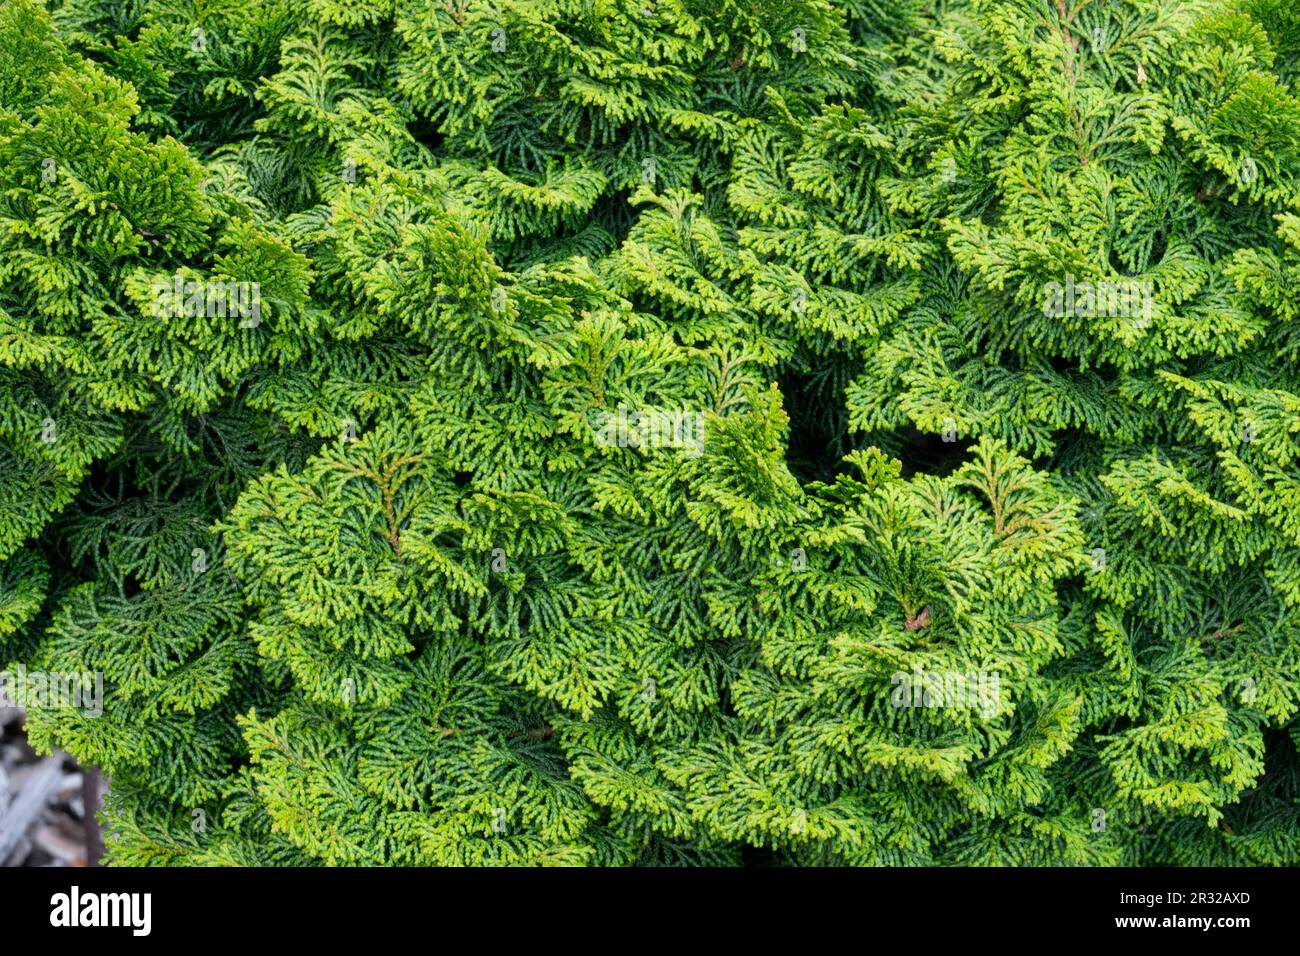 Japanese Cypress, Hinoki Cypress 'Rigida', Chamaecyparis obtusa 'Rigida' green spring foliage Stock Photo